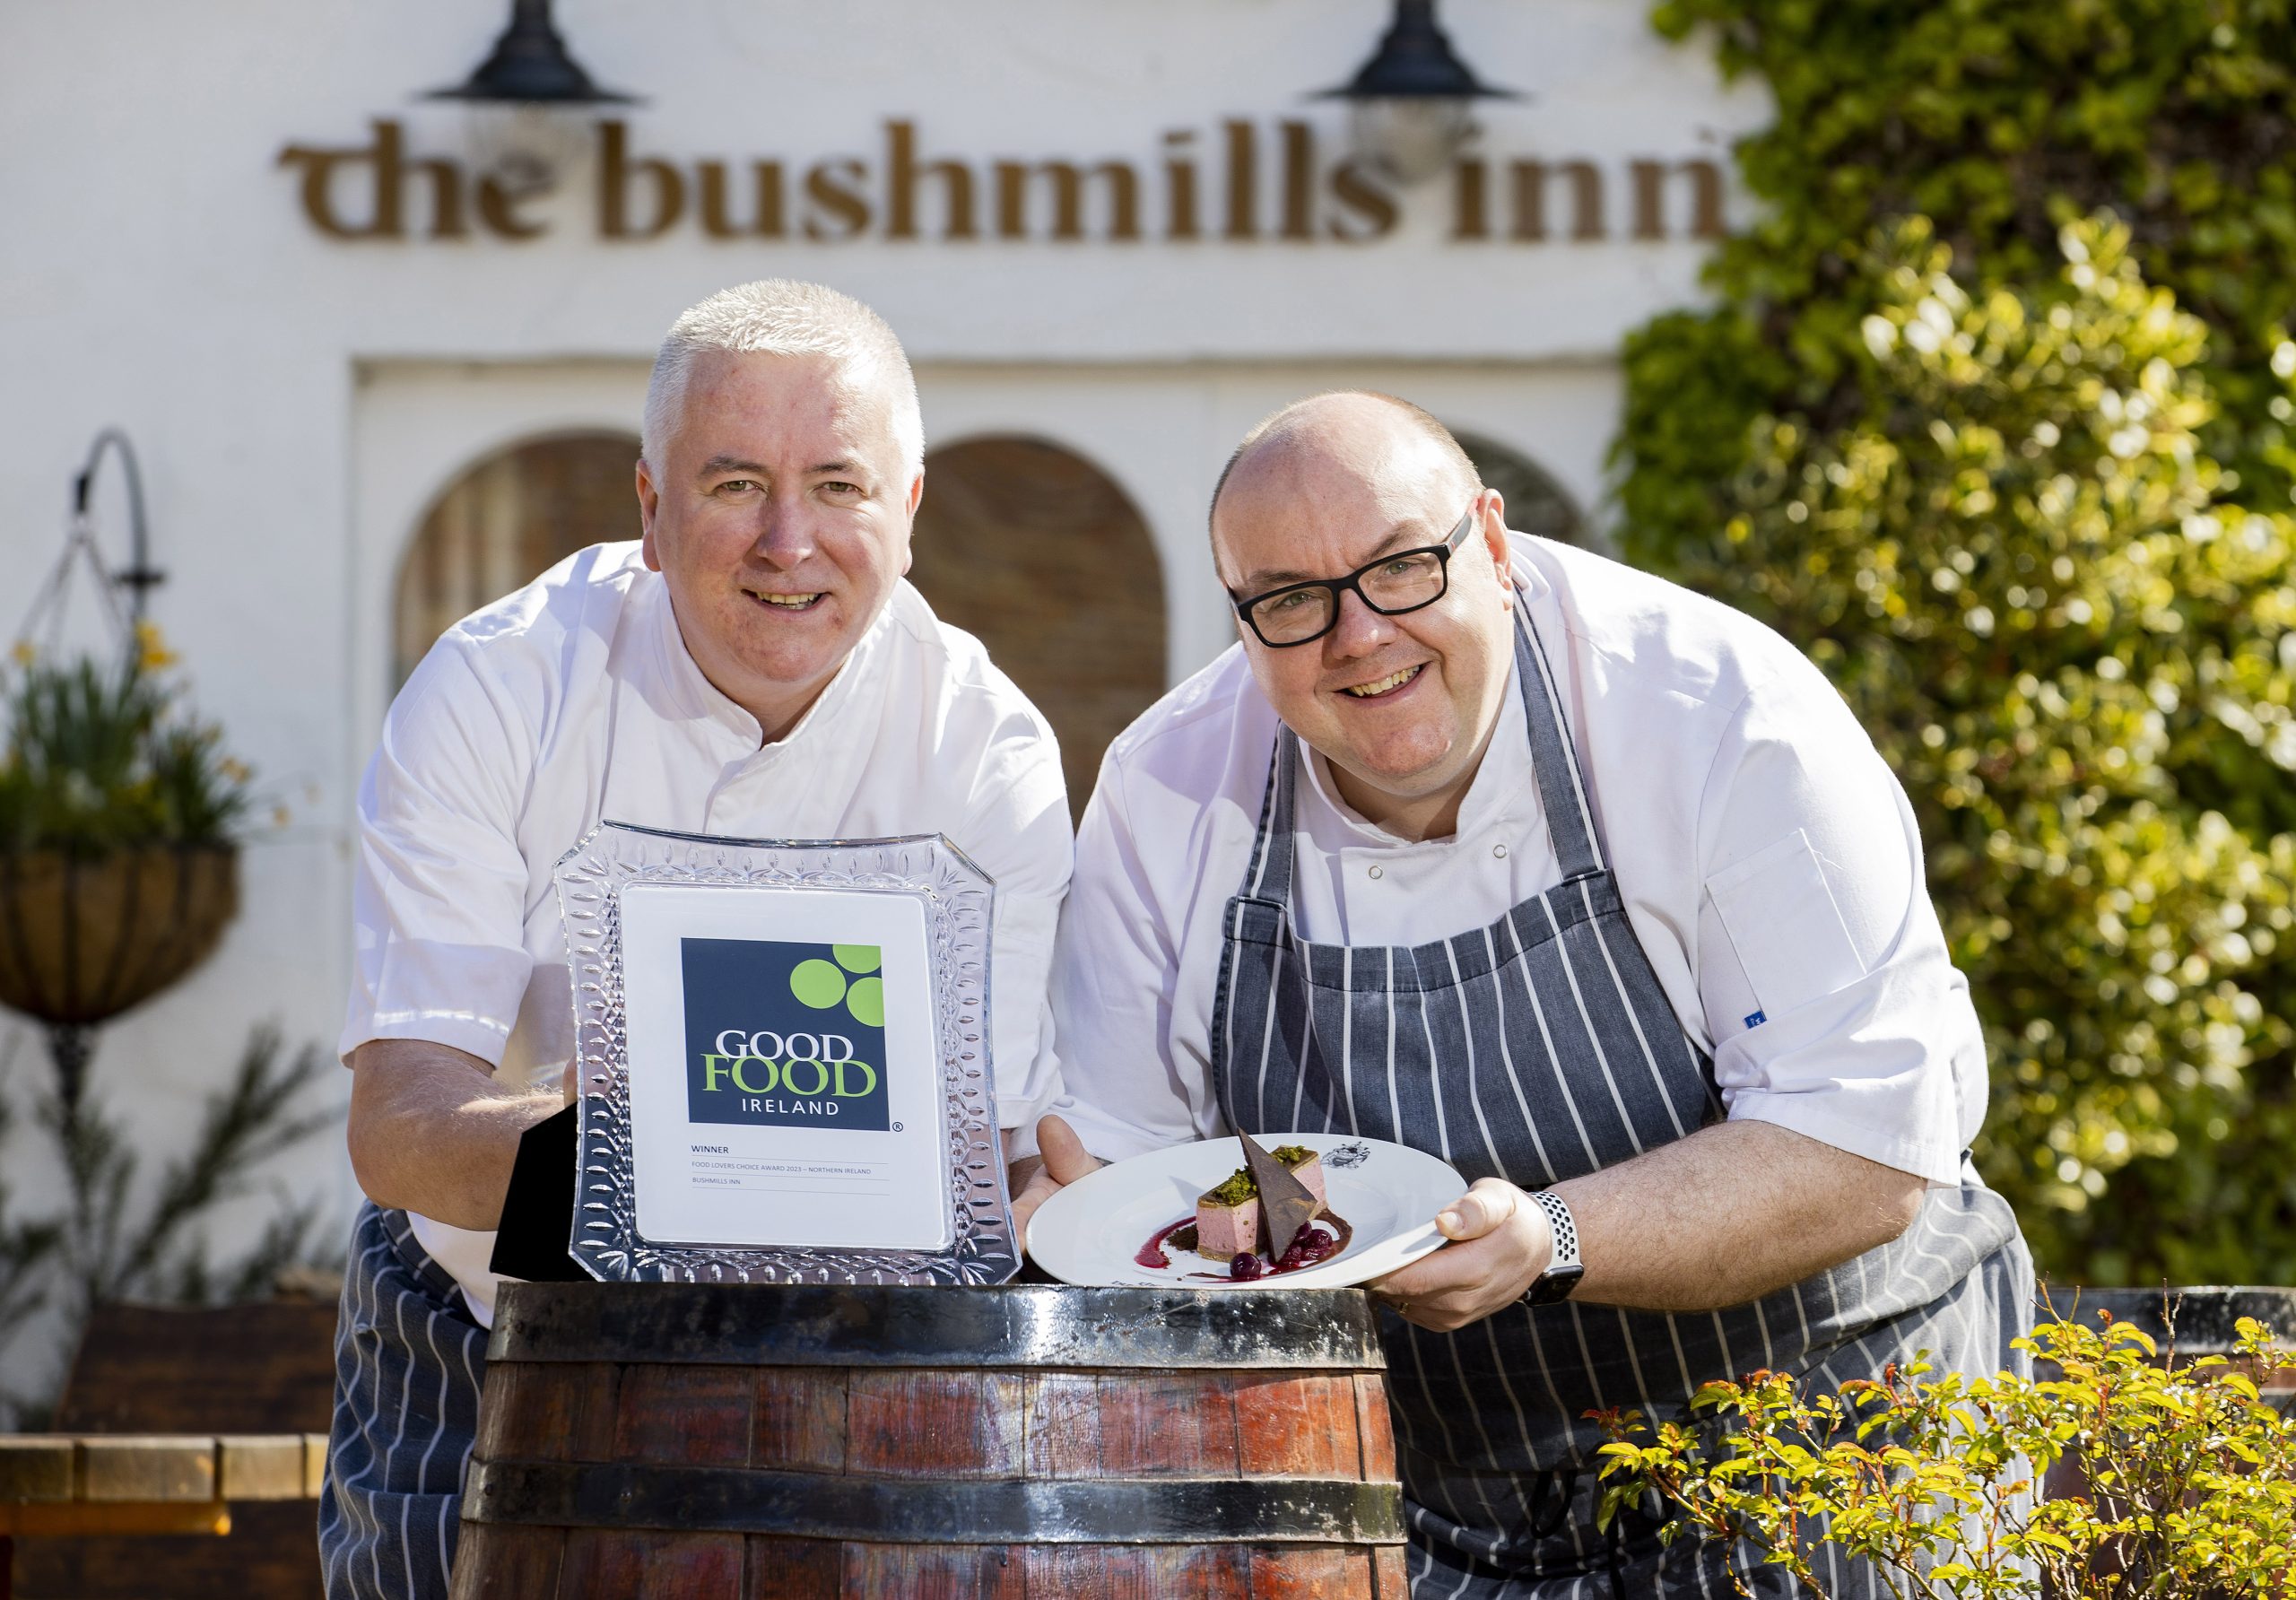 Bushmills Inn wins Food Lovers Choice Award at K Club event